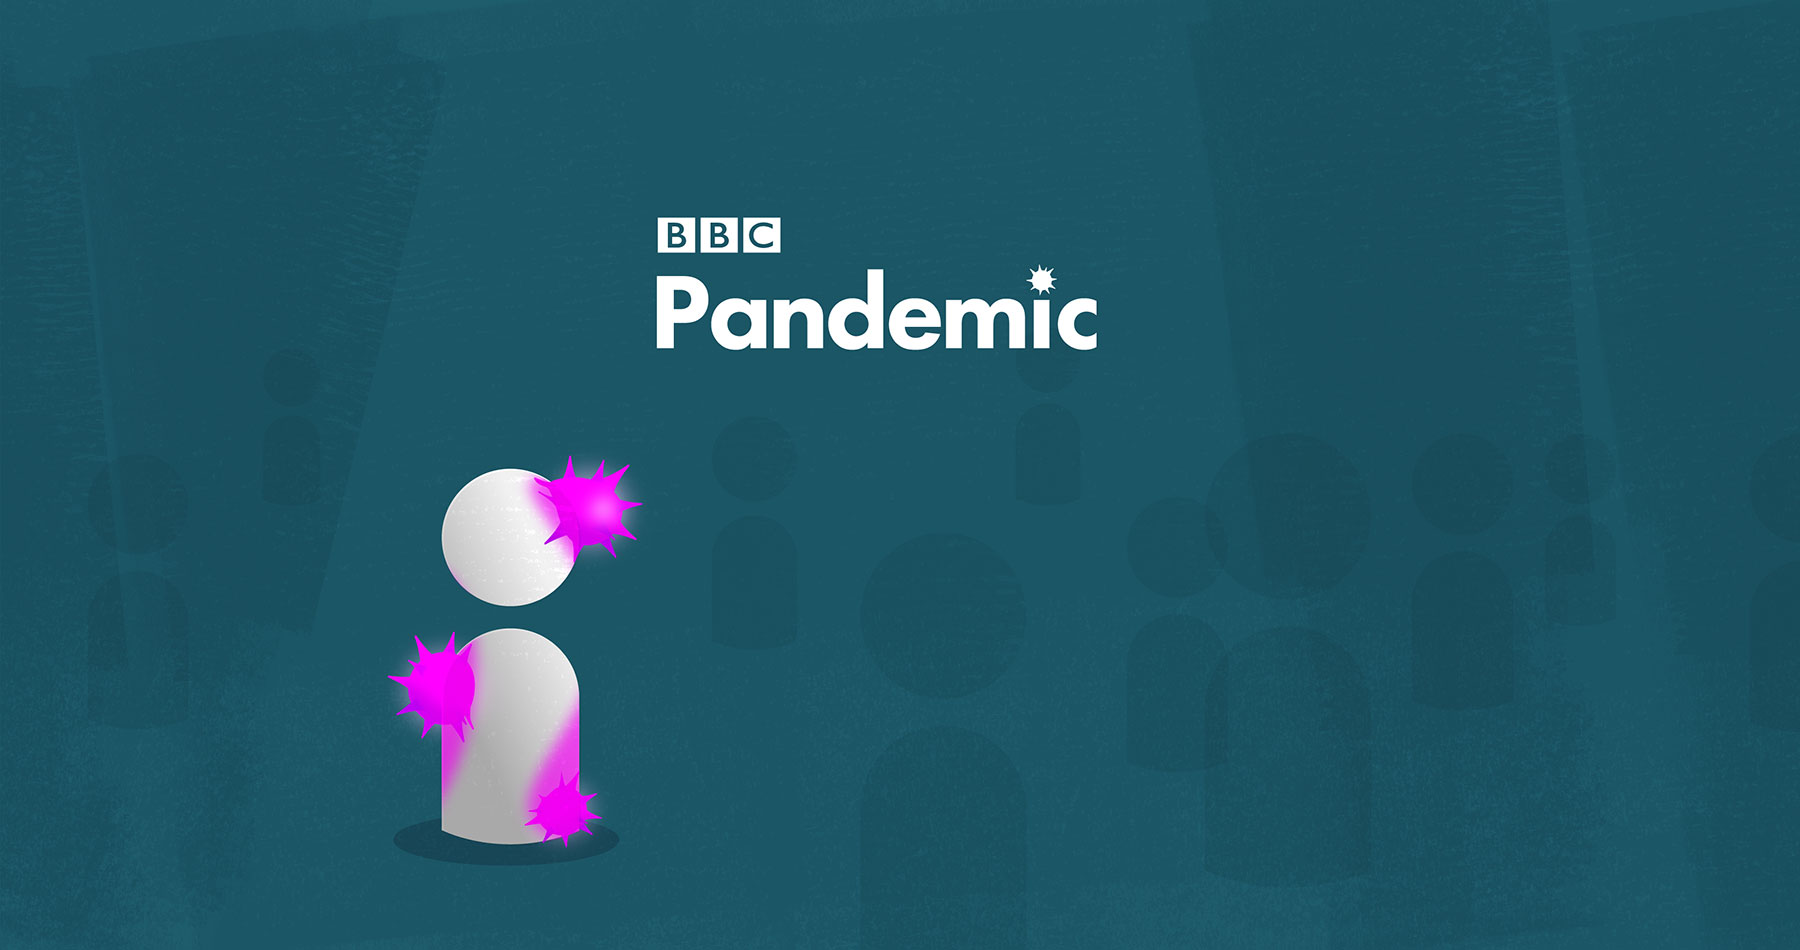 Big Motive Blog - BBC Pandemic